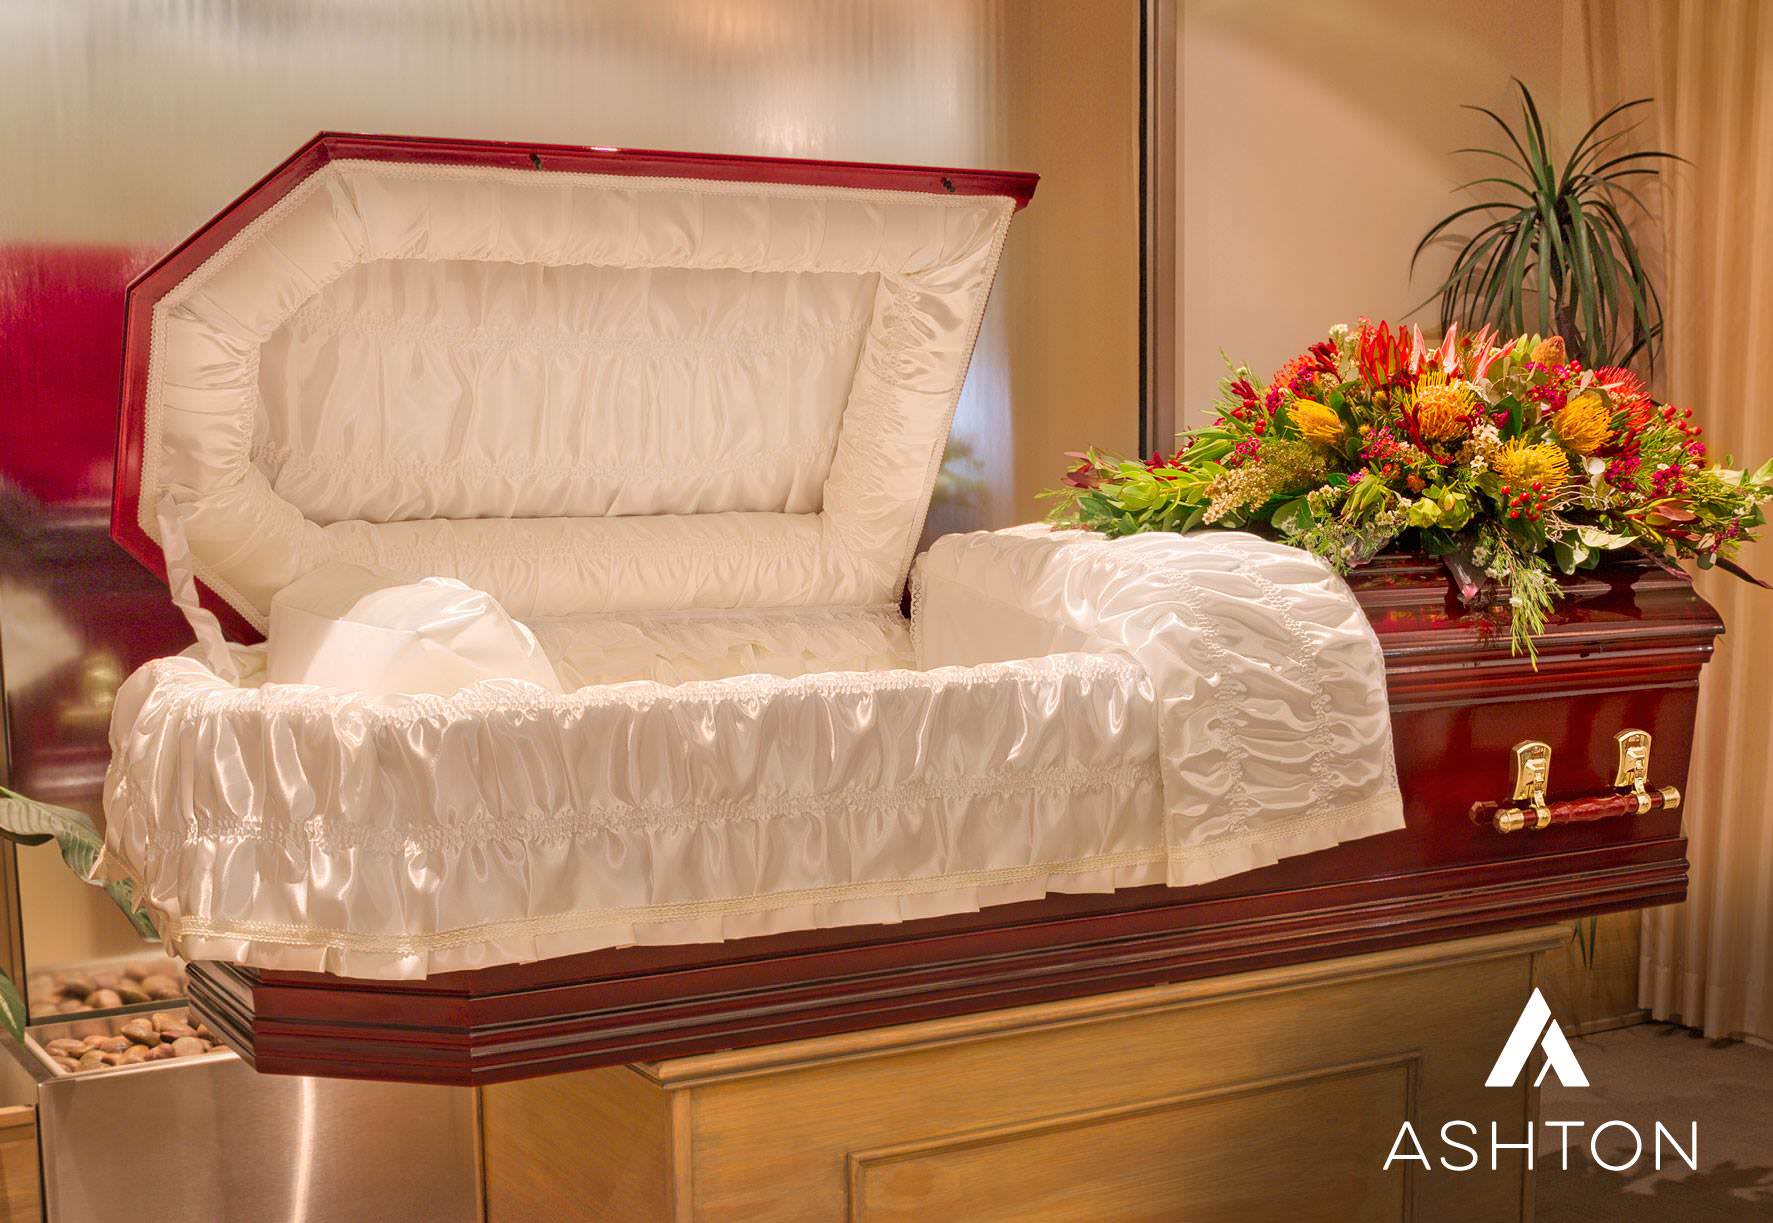 Our craftsmen take great pride in creating our premium casket range.